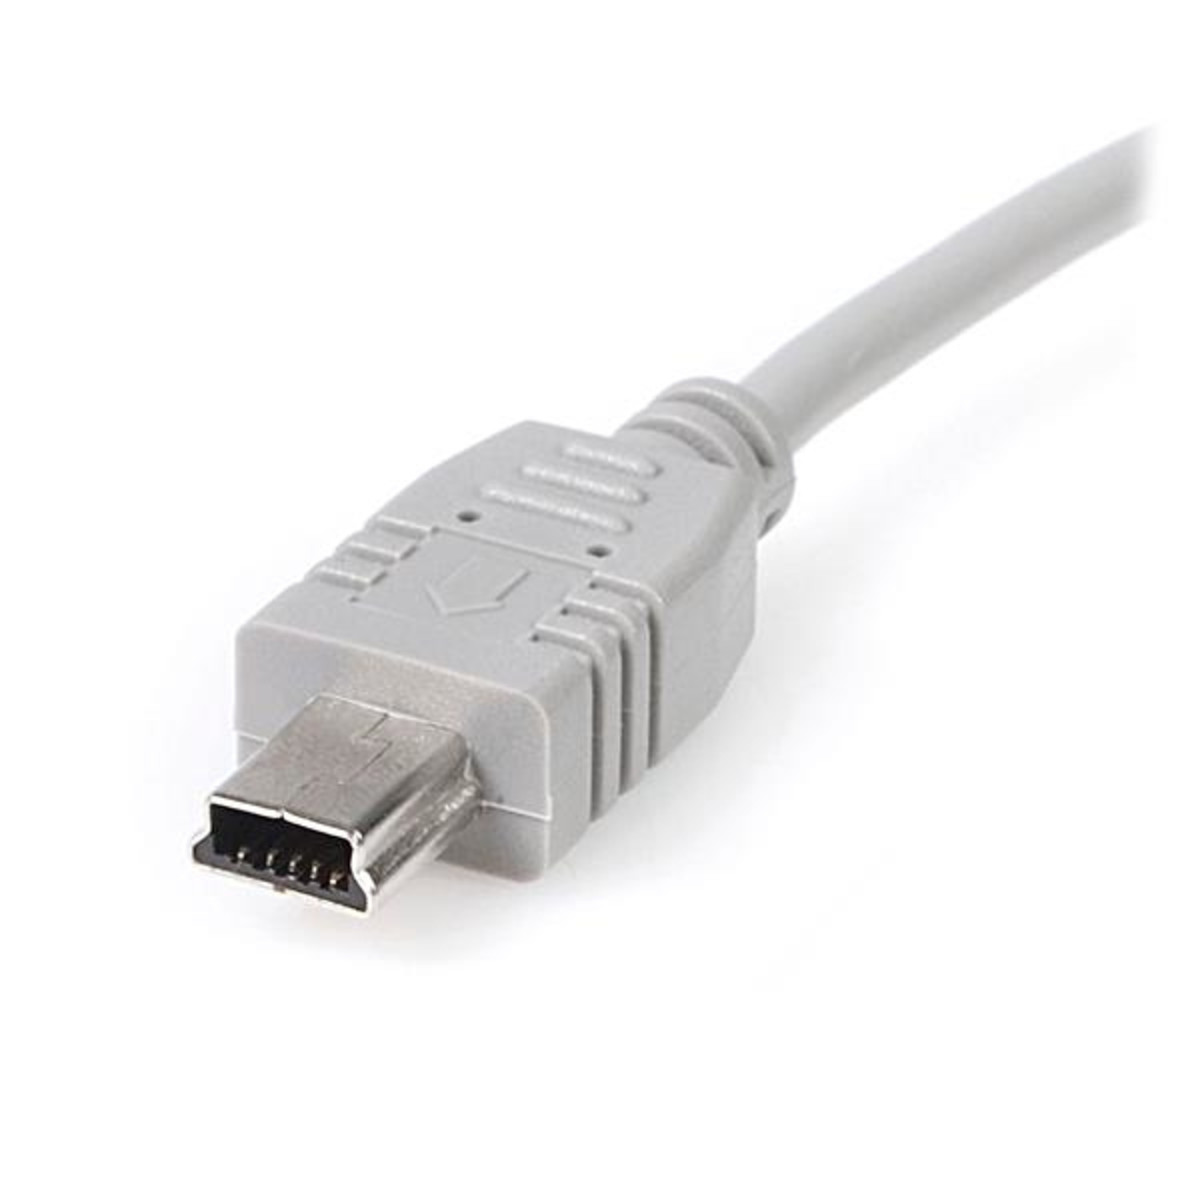 6in Mini USB 2.0 Cable - A to Mini B